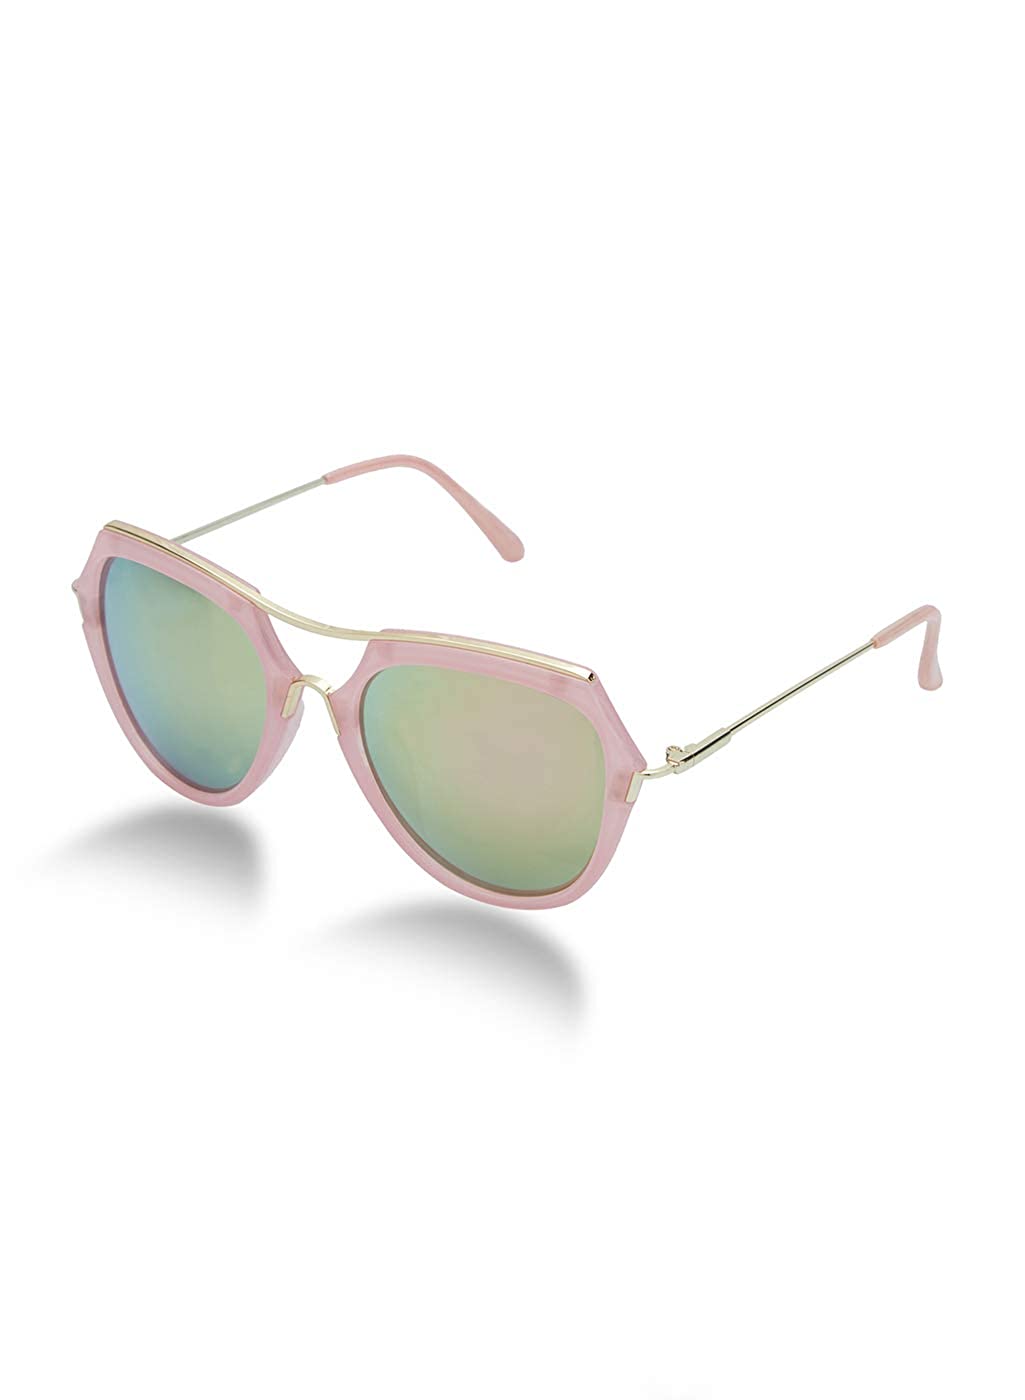 VAST Aviator Women's Fashion Sunglasses (3181 Silver Blue Mirror) - sunglasses - Sovbid